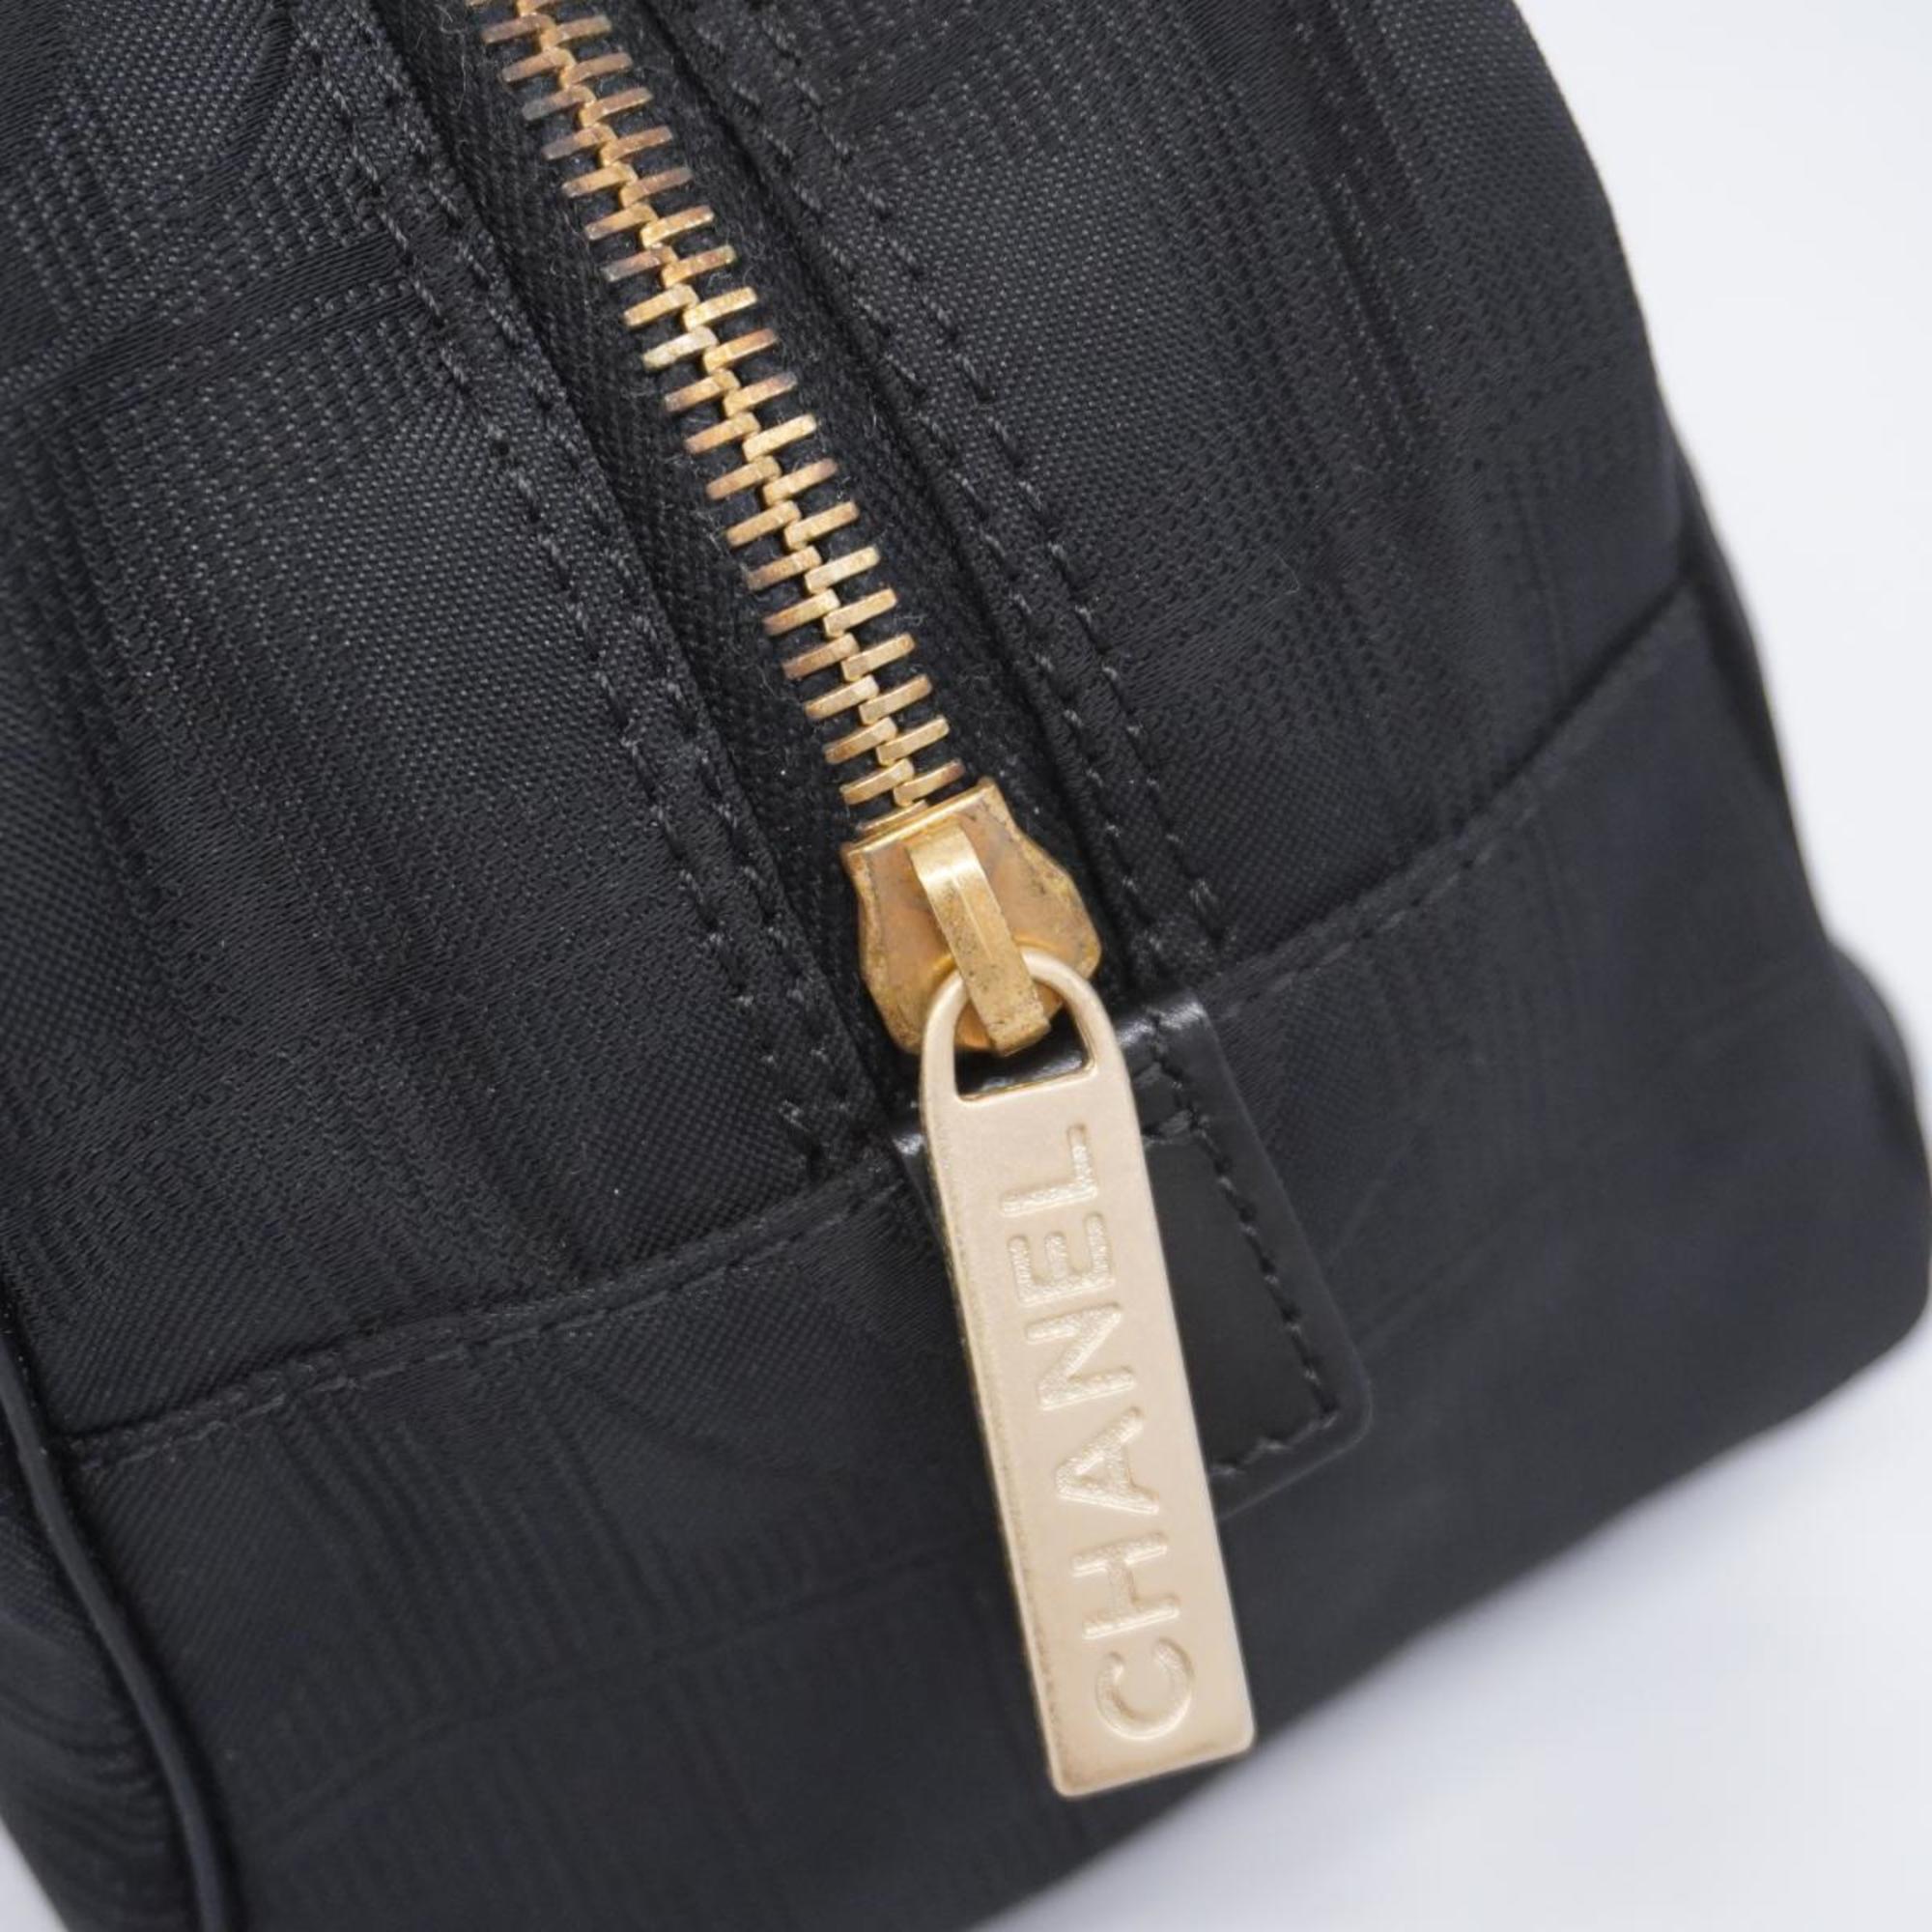 Chanel handbag new travel nylon black champagne ladies